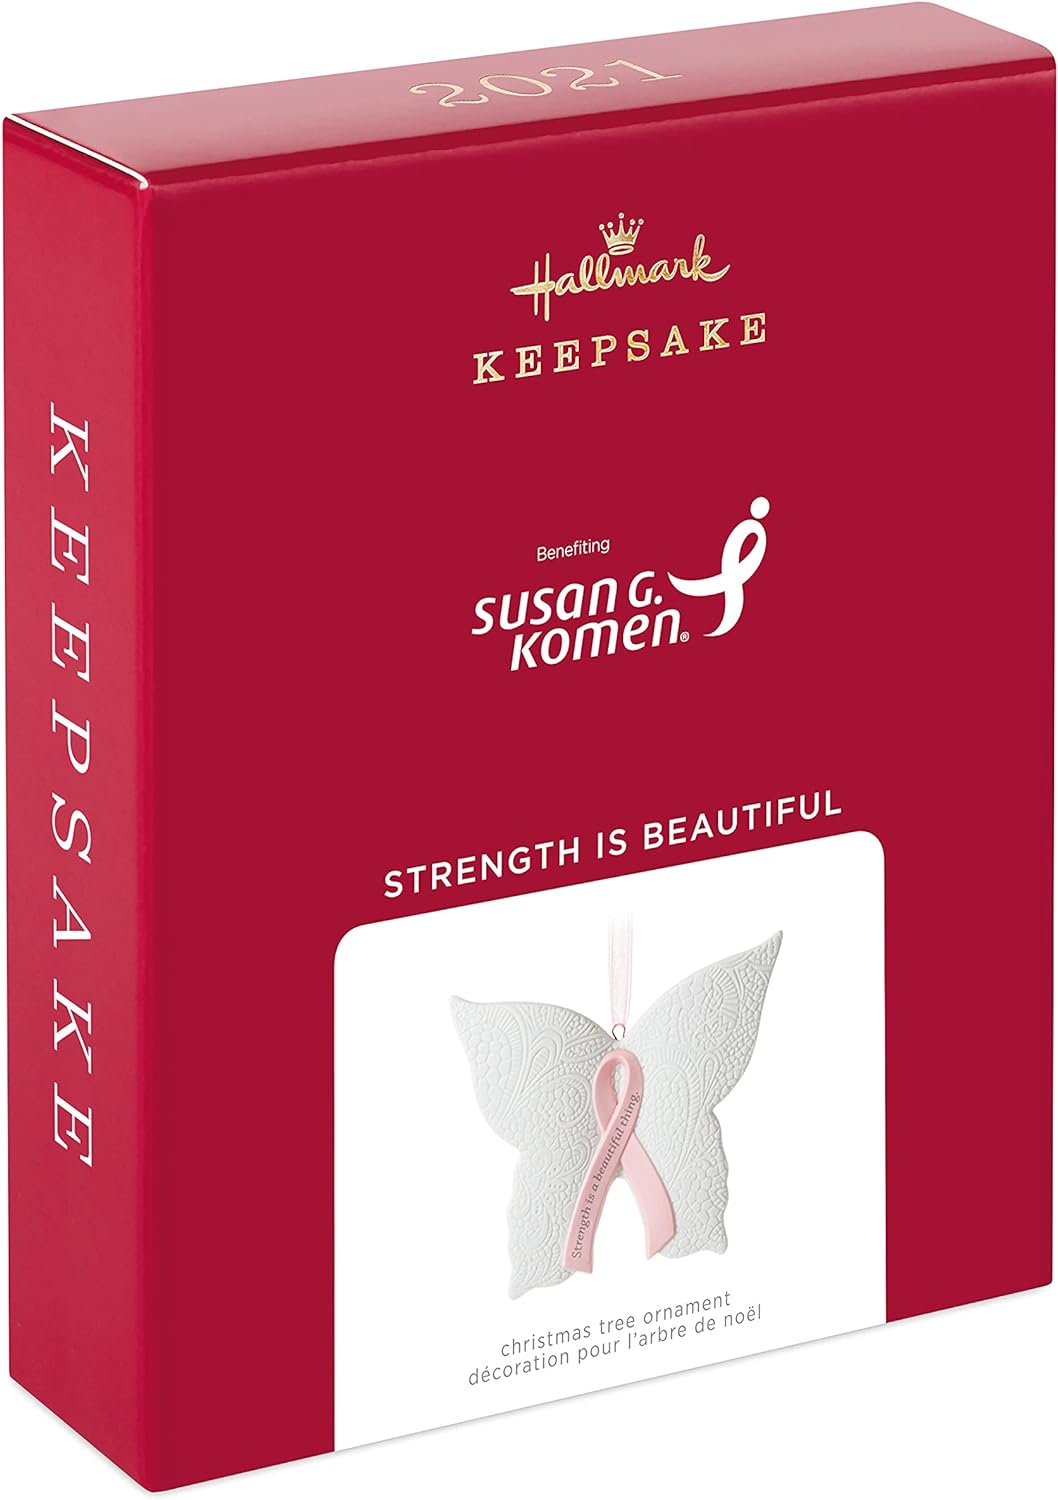 Strength is Beautiful Butterfly Benefiting Susan G. Komen Hallmark Keepsake Christmas Ornament 2021